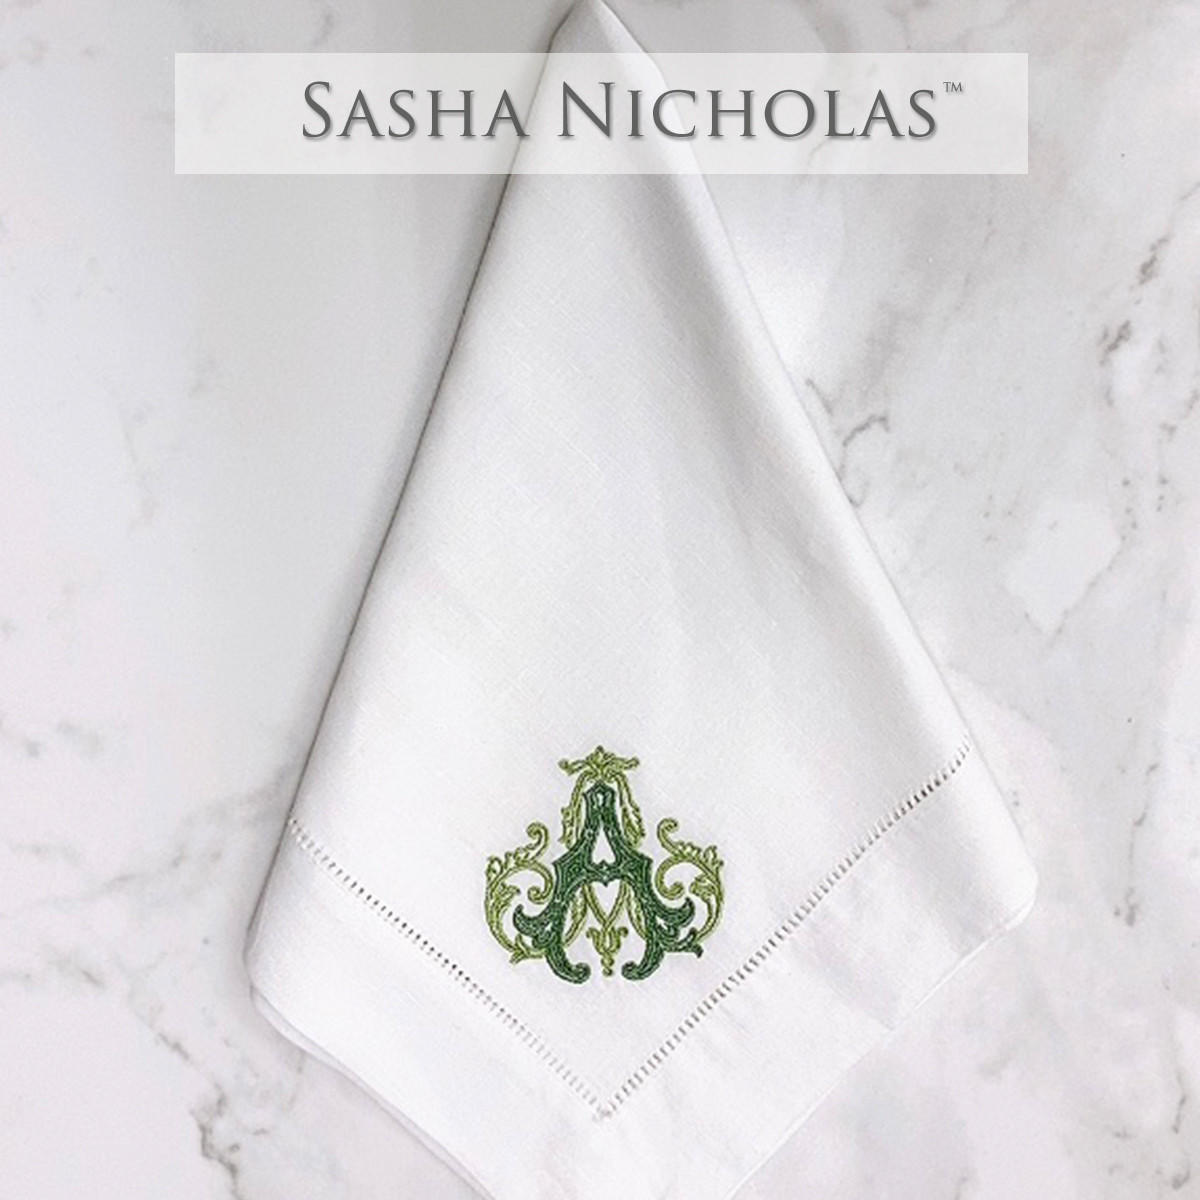 Sasha Nicholas White Linen Dinner Napkin, Couture Monogram, SNLIN100, Sasha Nicholas